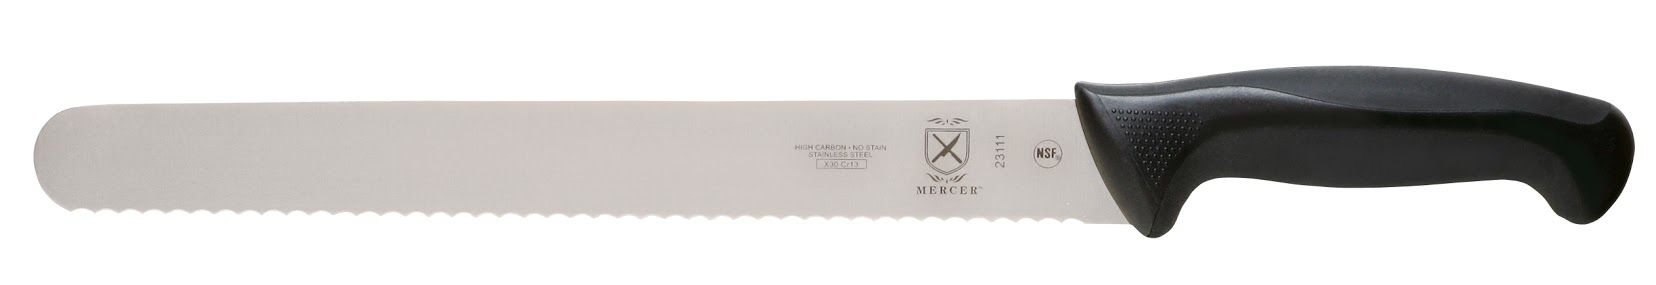 Mercer Culinary Ultimate White, 11 Inch Slicer Wavy Edge